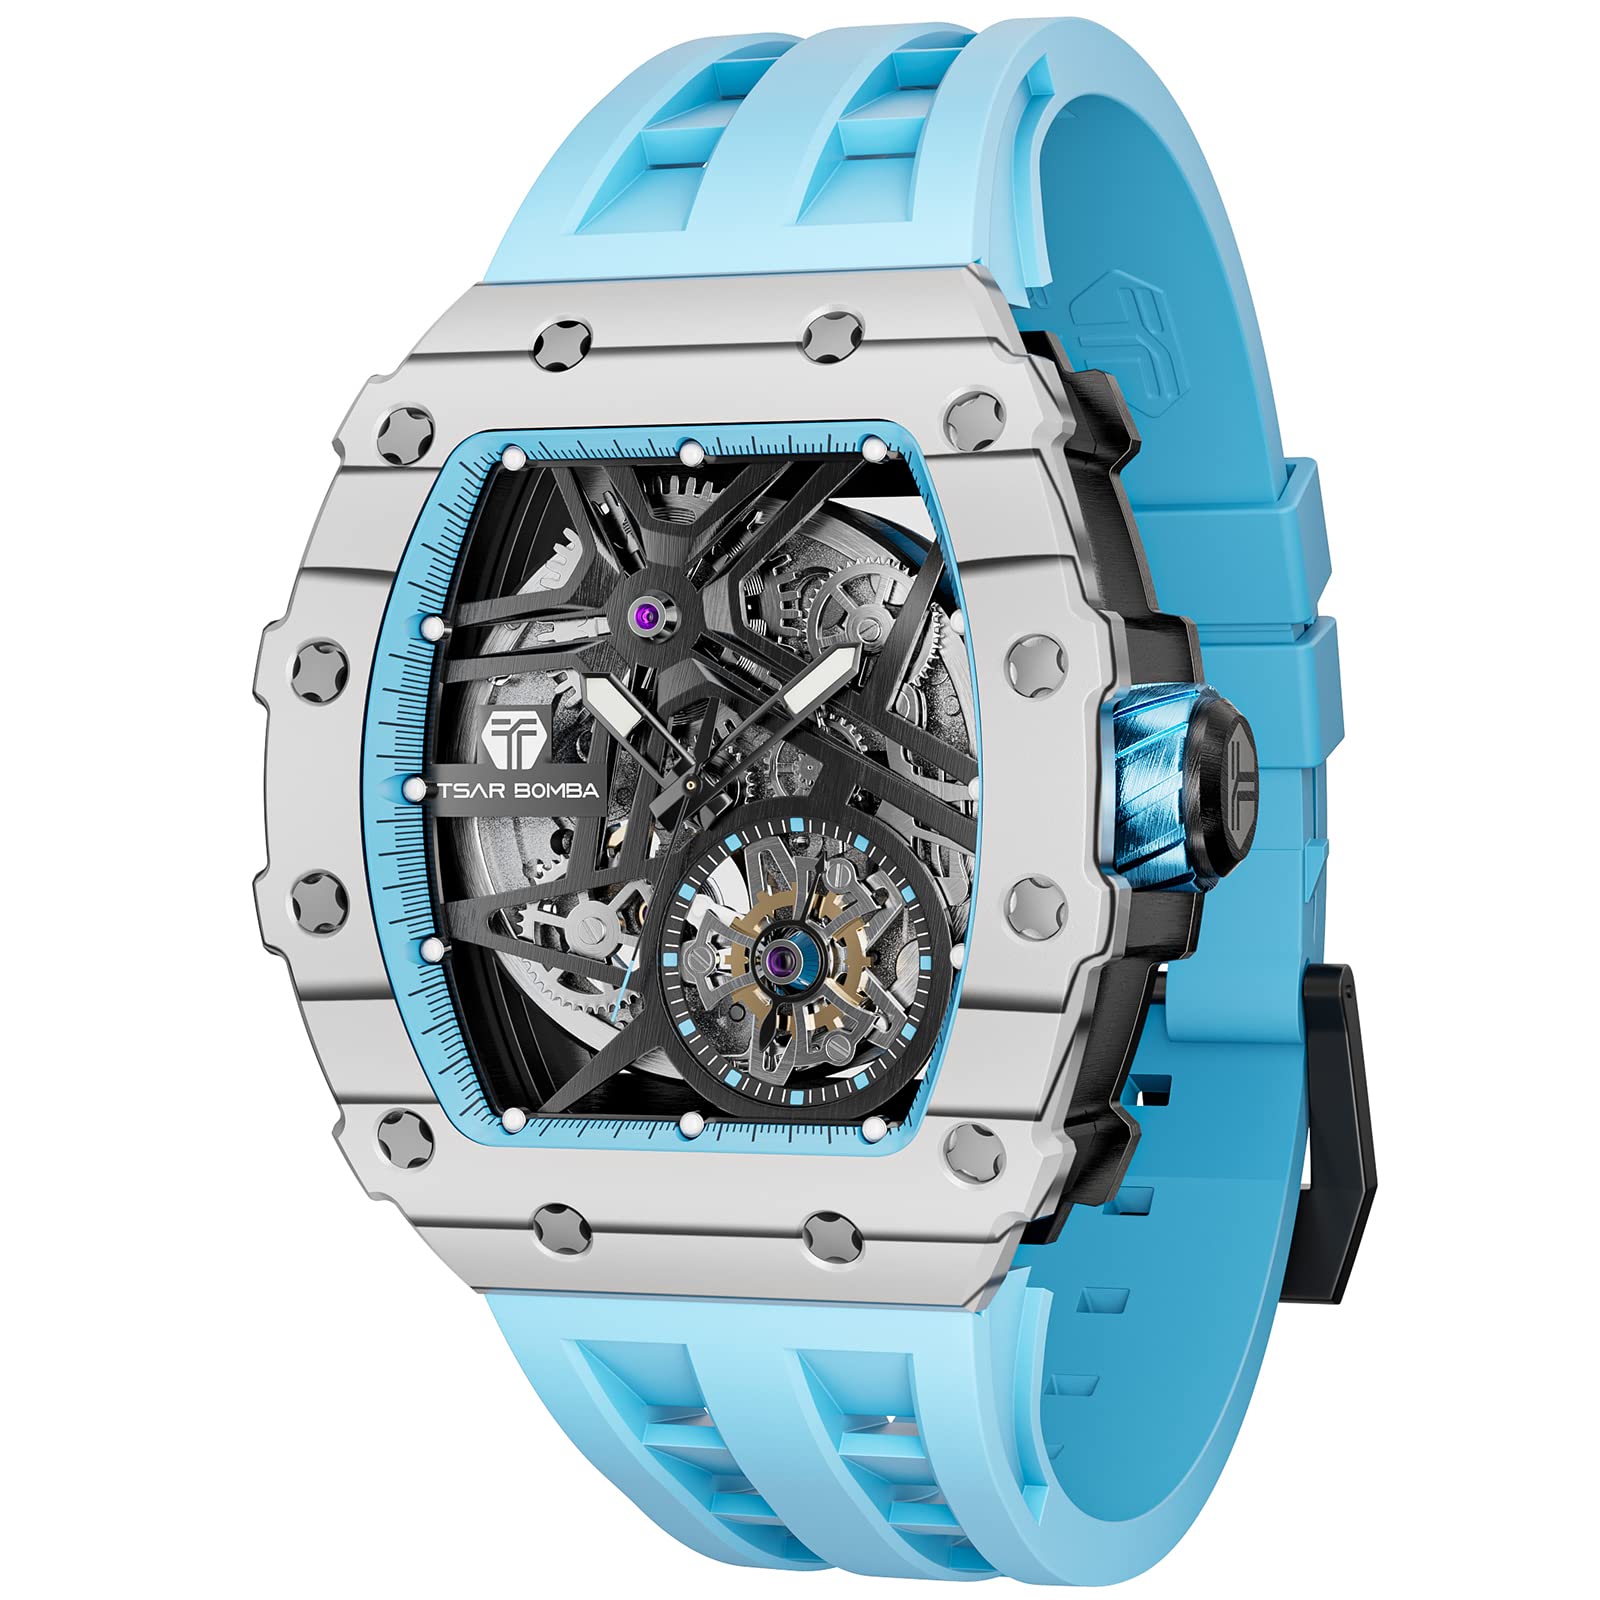 TSAR BOMBA Luxury Automatic Watches for Men - Carbon Fiber Bezel - Japanese Movement Sapphire Glass - 50M Waterproof Mens Wa